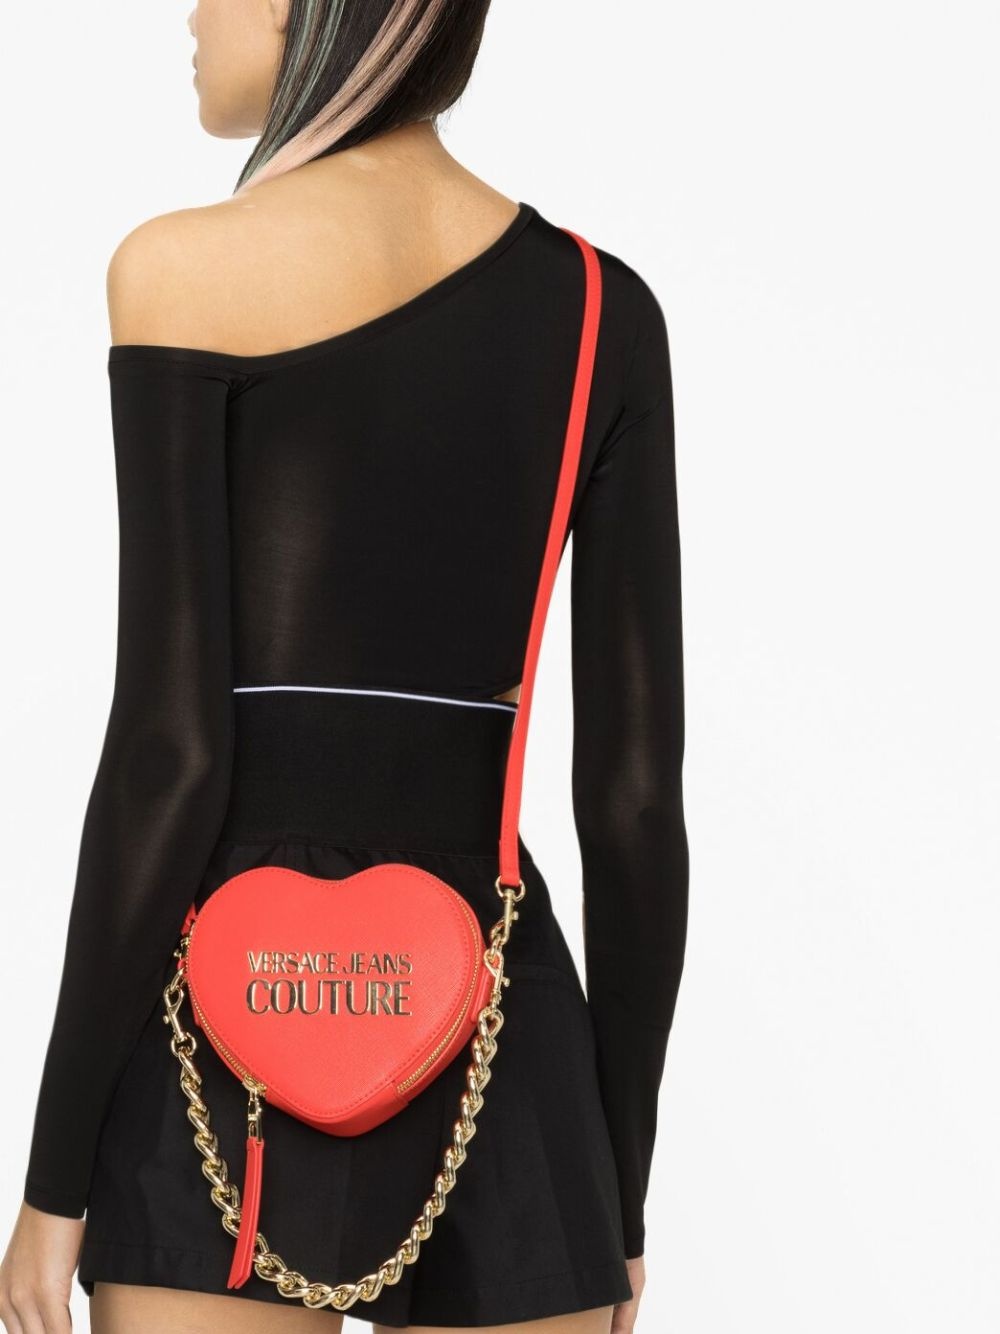 Versace Jeans Couture Heart Bag - Ziniosa